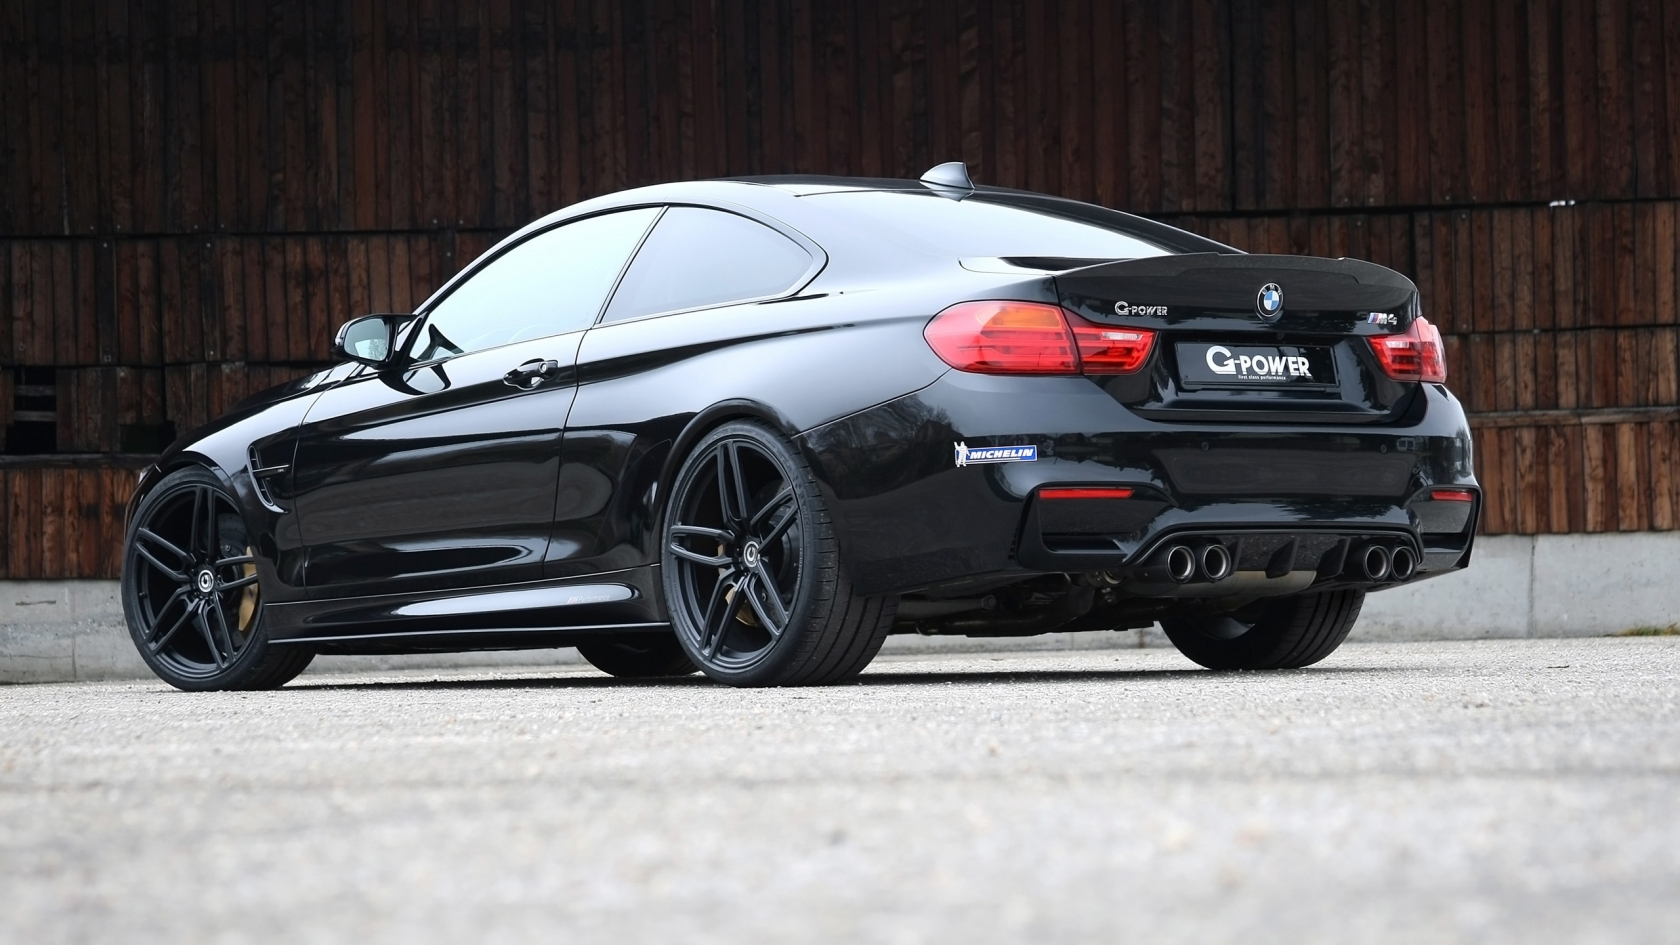 Black BMW M4 G-Power 2014 Rear for 1680 x 945 HDTV resolution